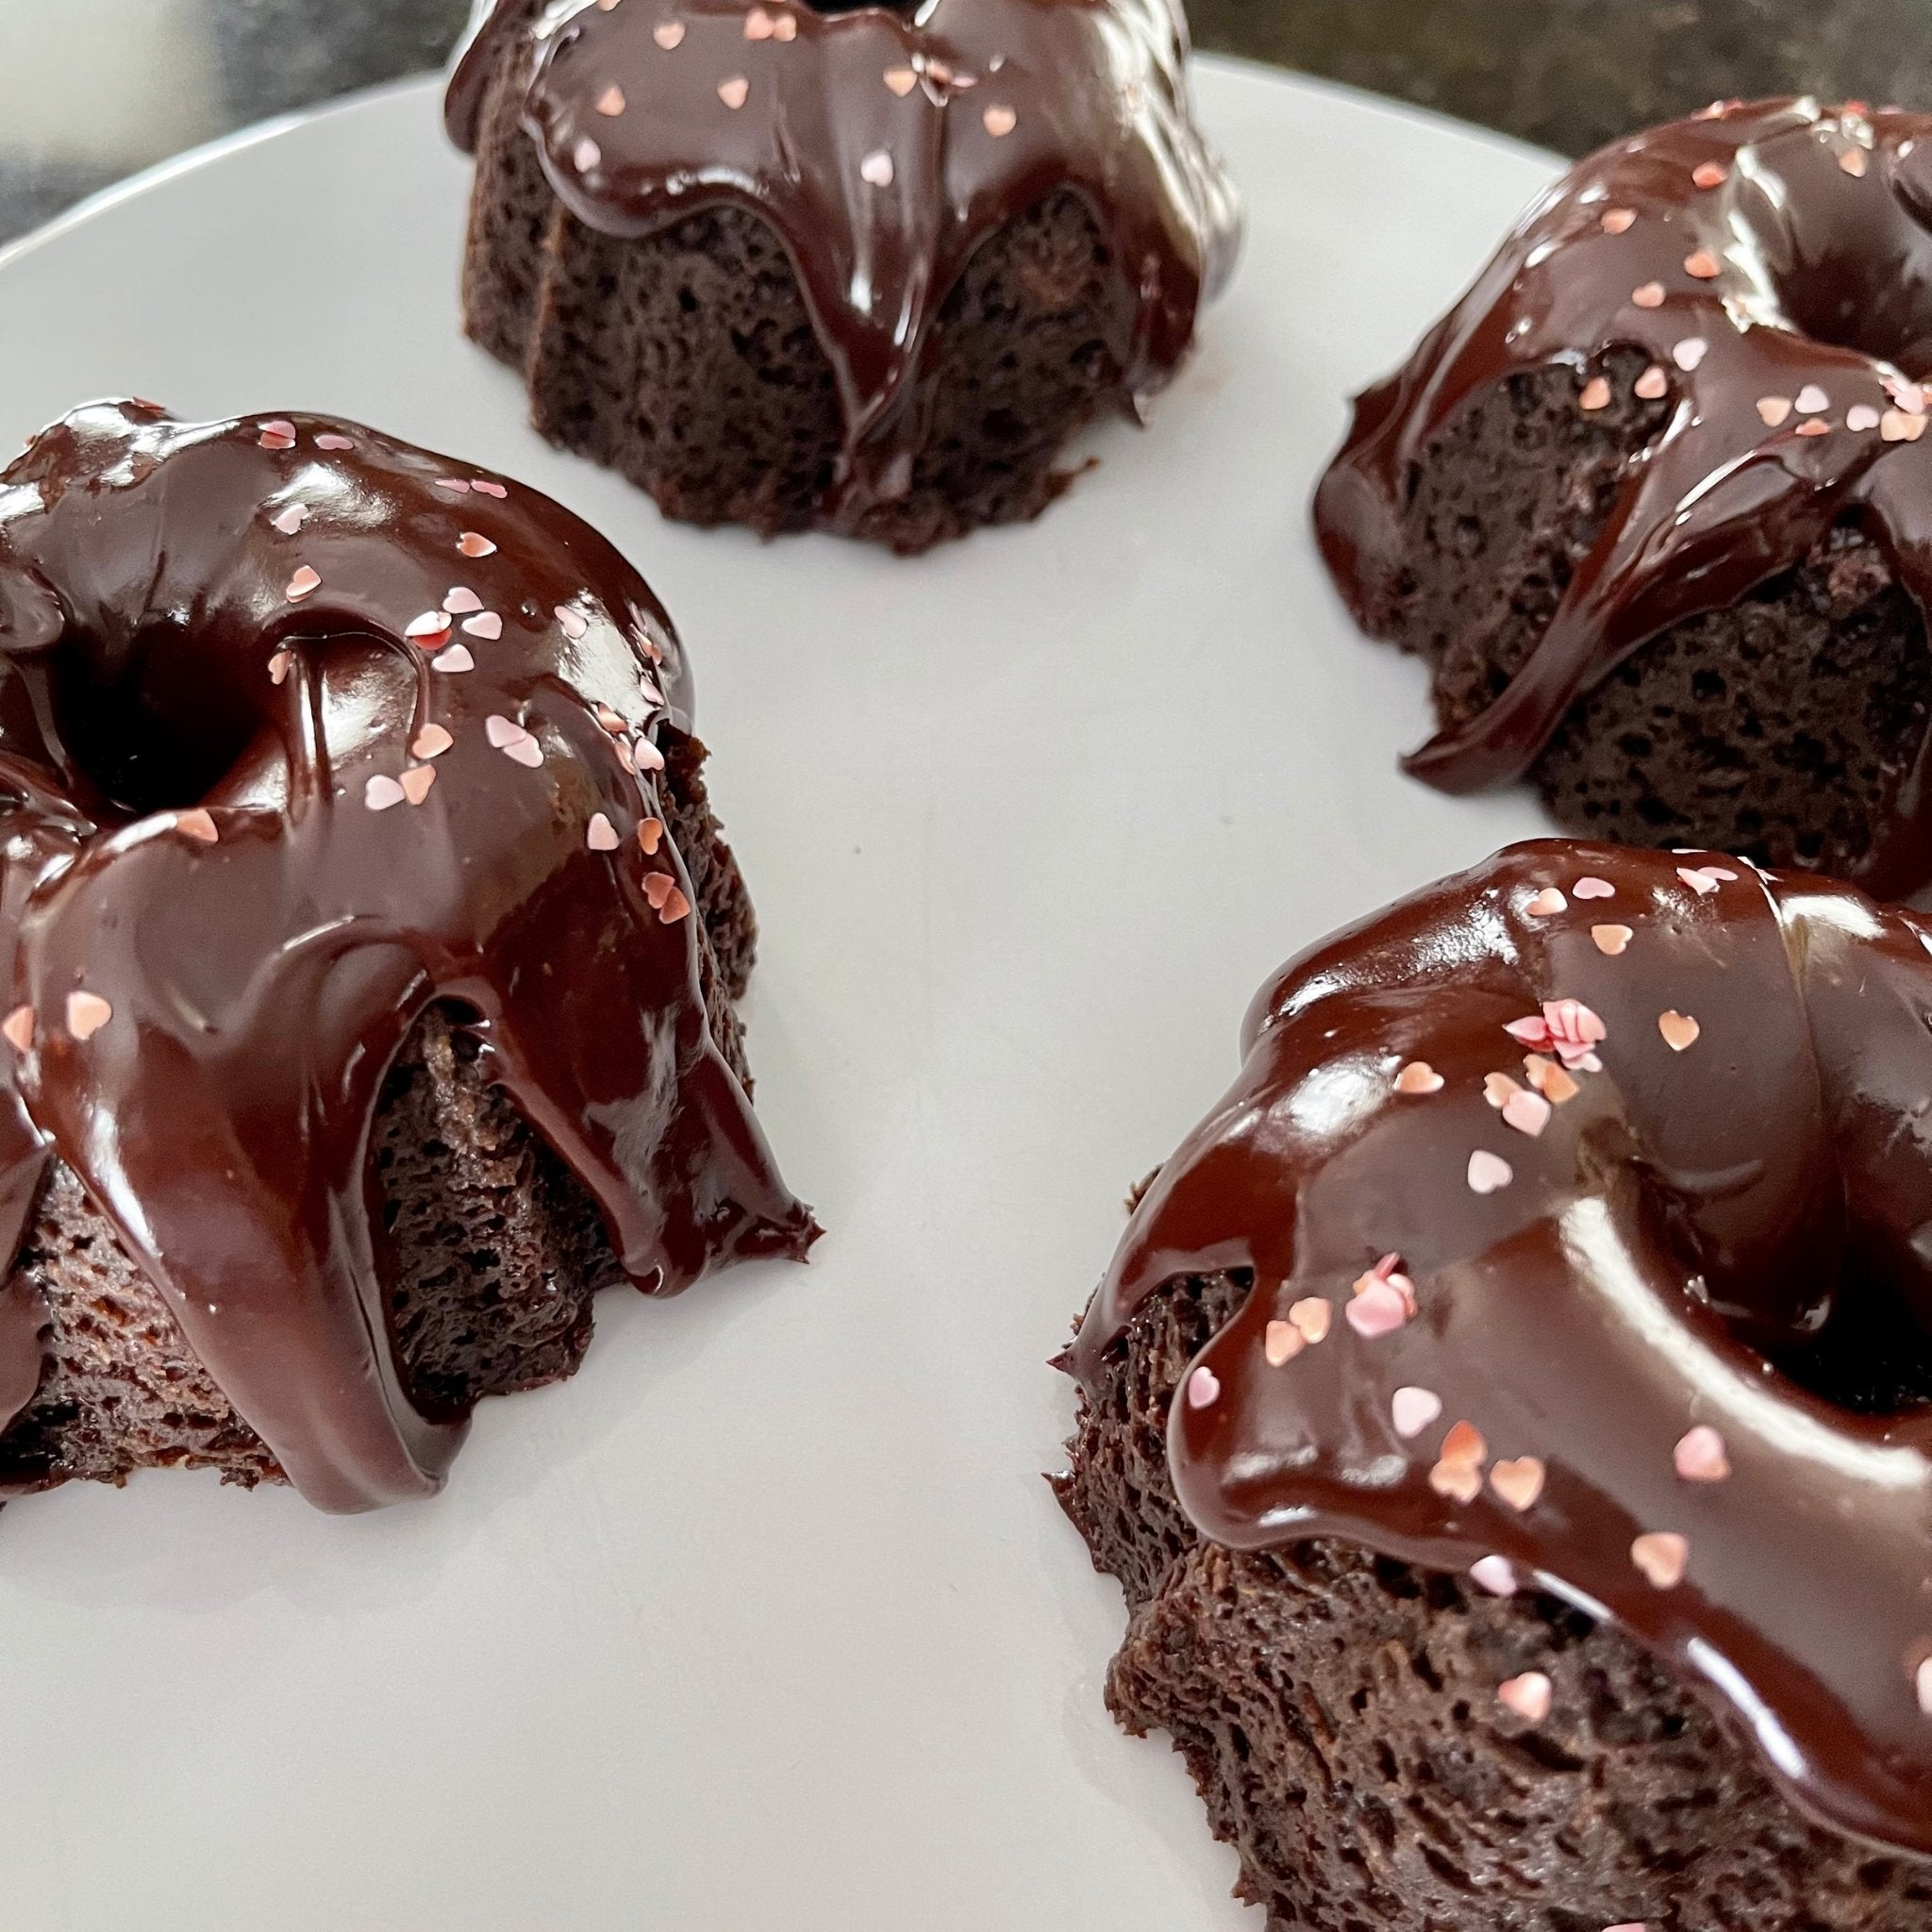 Triple Chocolate Mini Bundt Cakes with Grand Marnier Chocolate Ganache